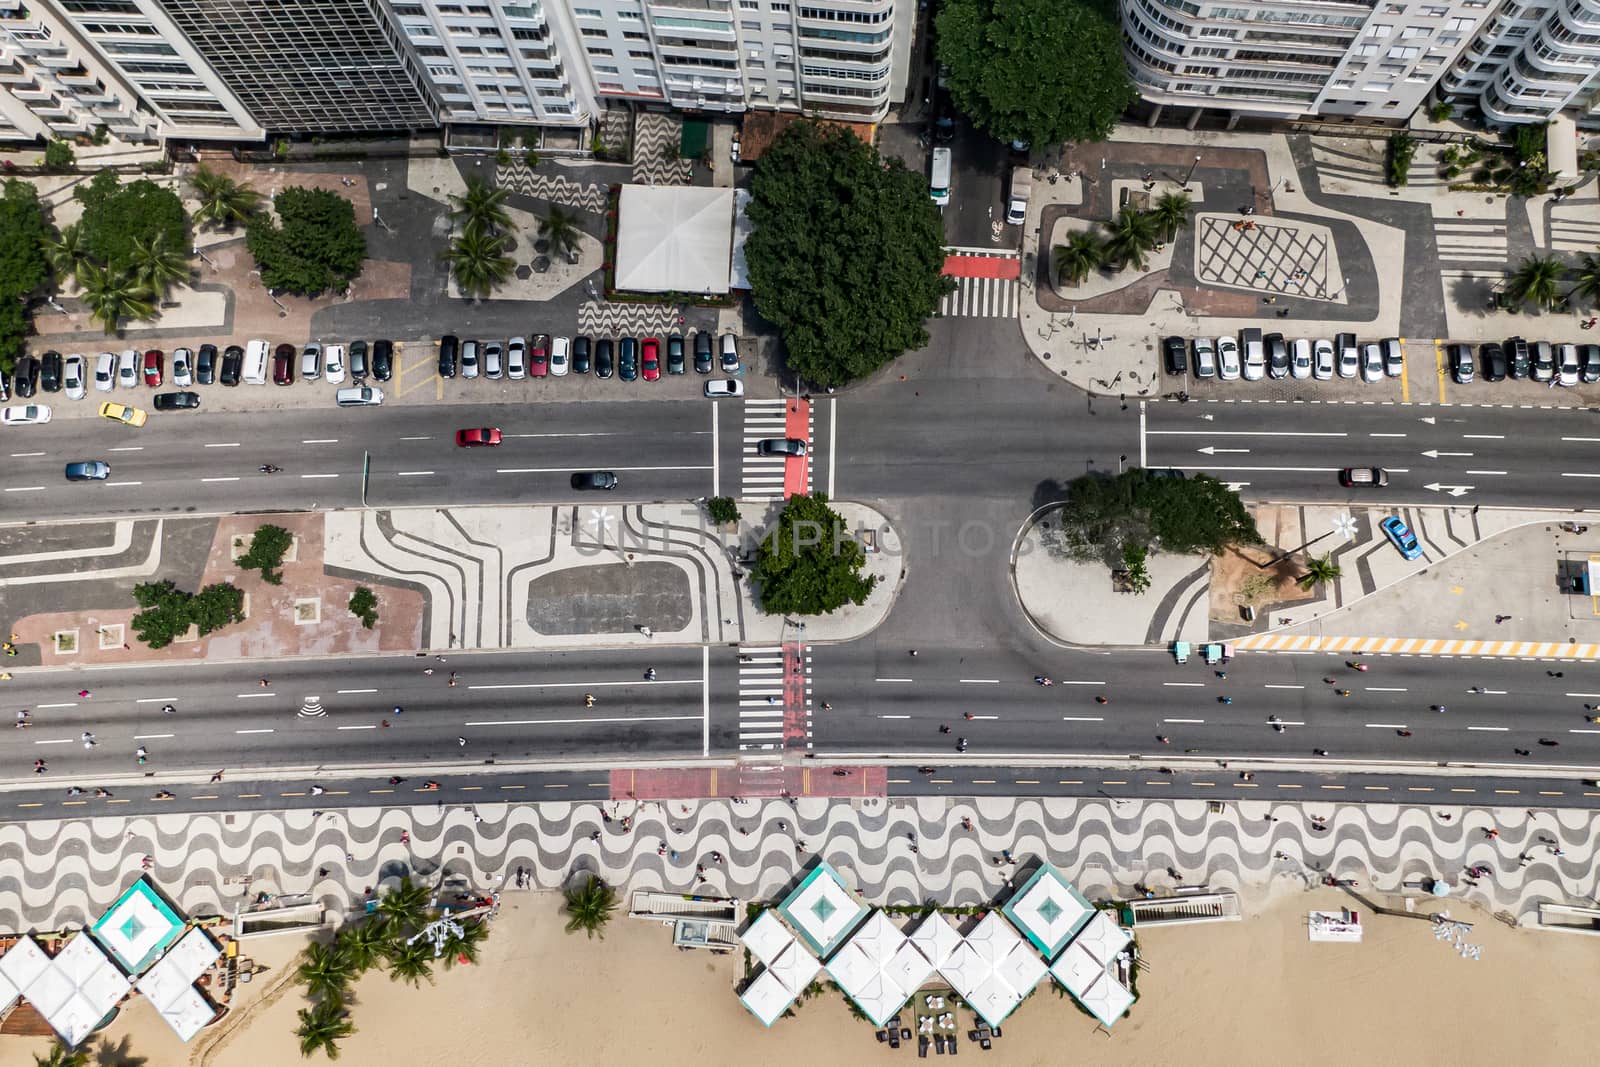 Top View of Copacabana beach with mosaic of sidewalk in Rio de Janeiro by 9parusnikov